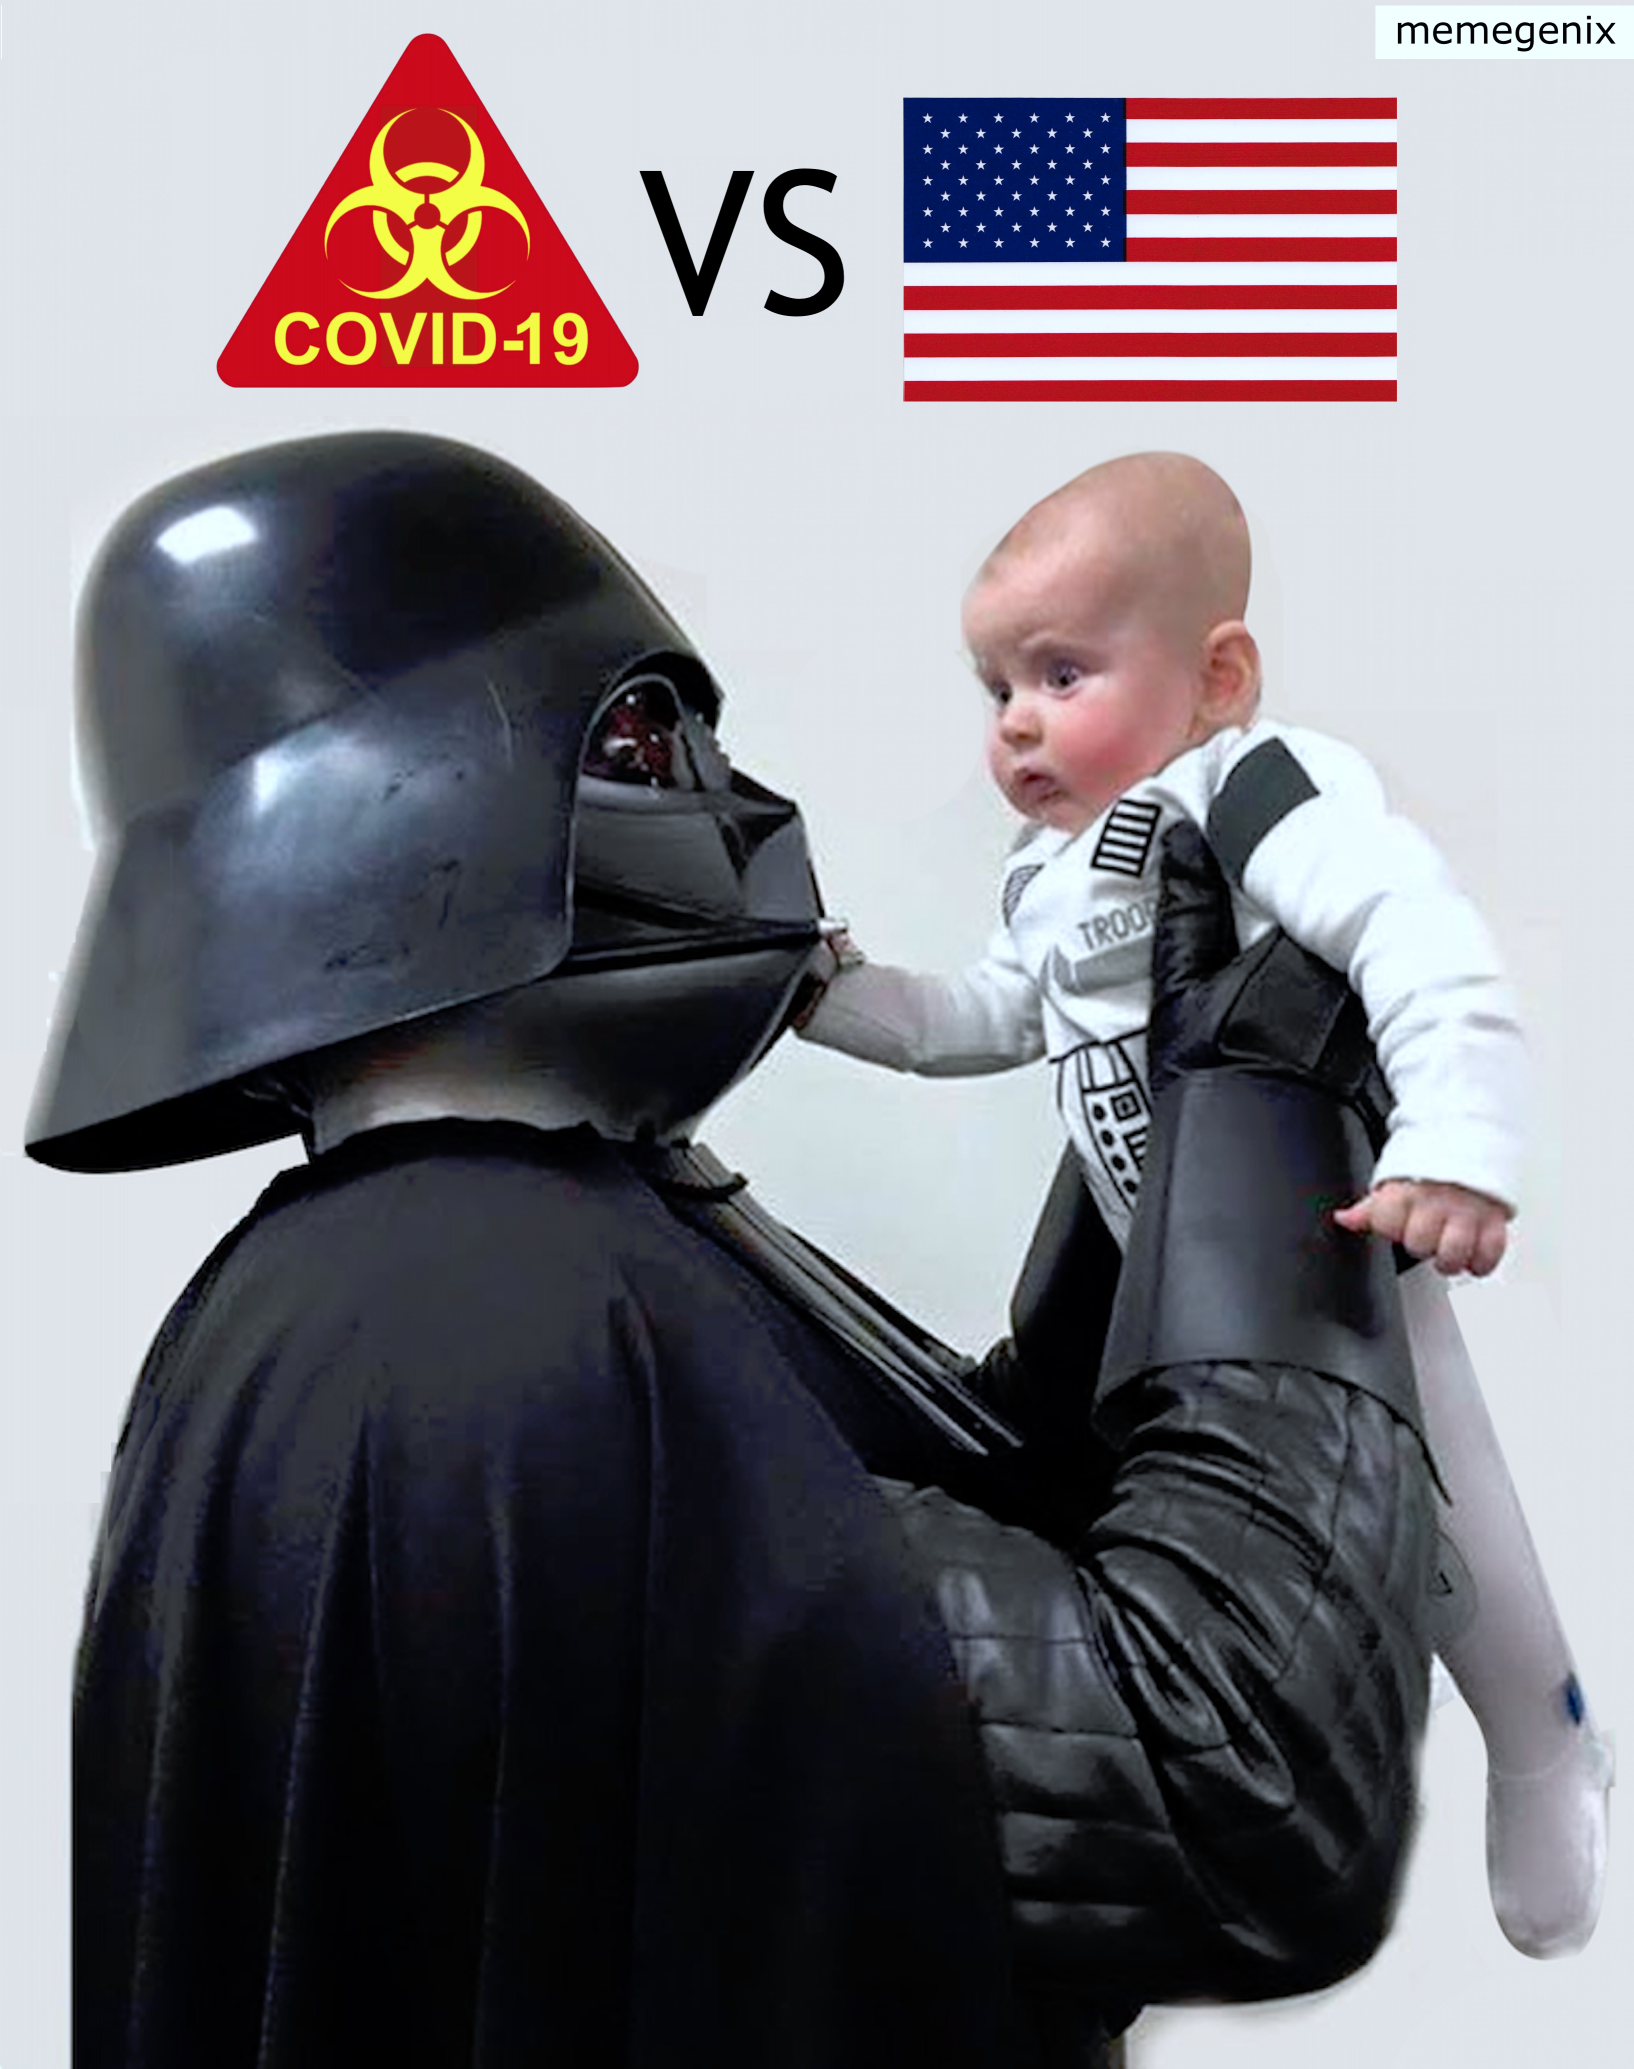 High Quality COVID-19-vs-USA Blank Meme Template